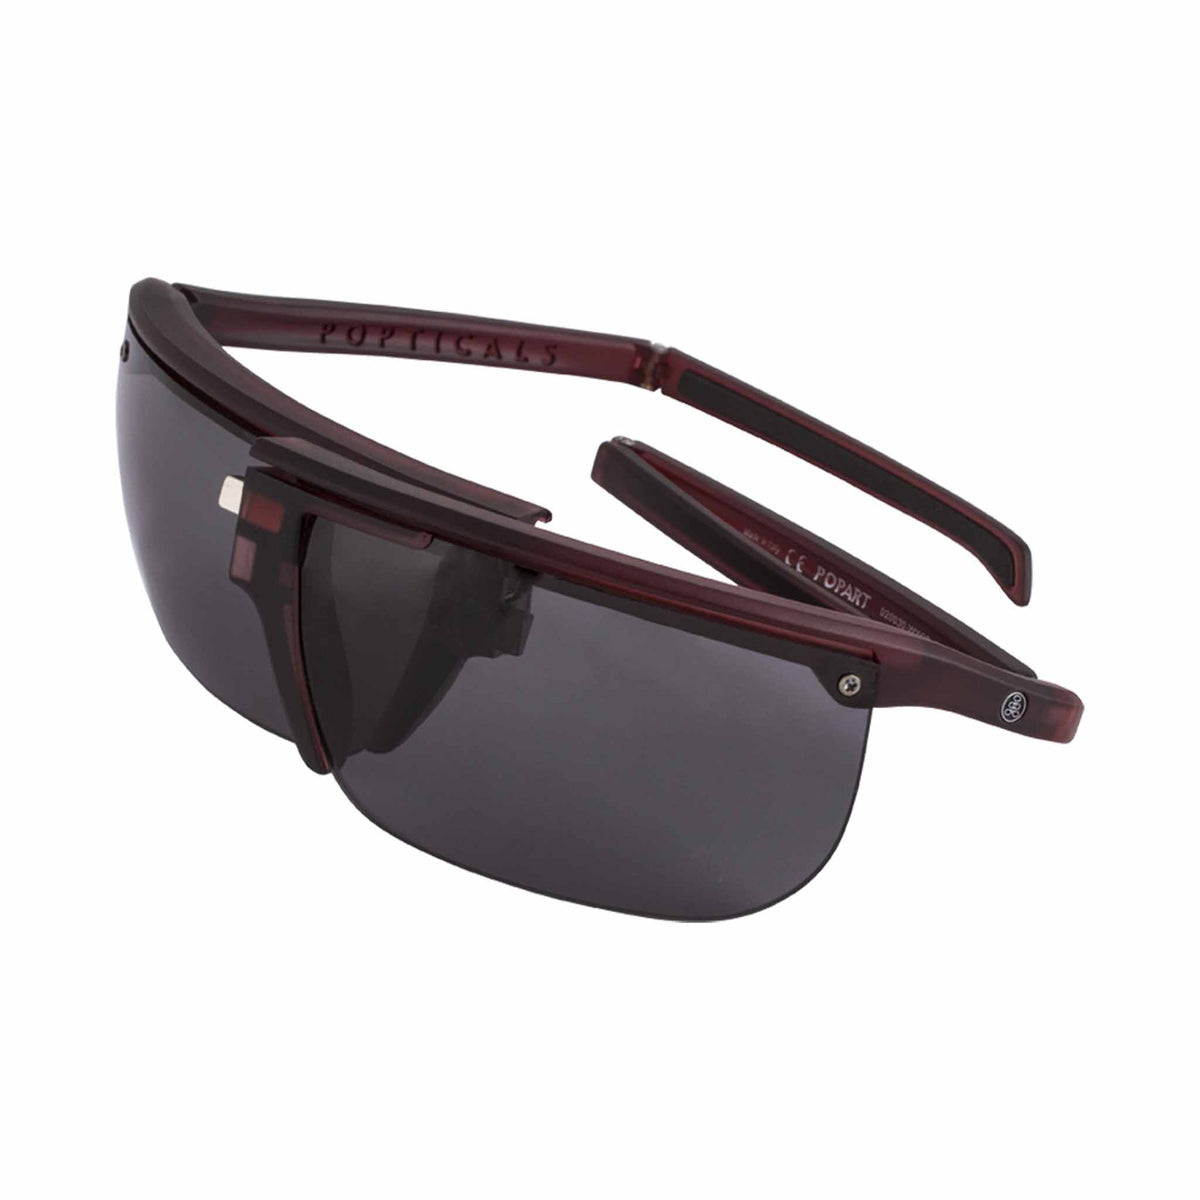 Popticals, Premium Compact Sunglasses, PopArt, 020030-WYGP, Polarized Sunglasses, Matte Wine Crystal, Gray Lenses, Spider View